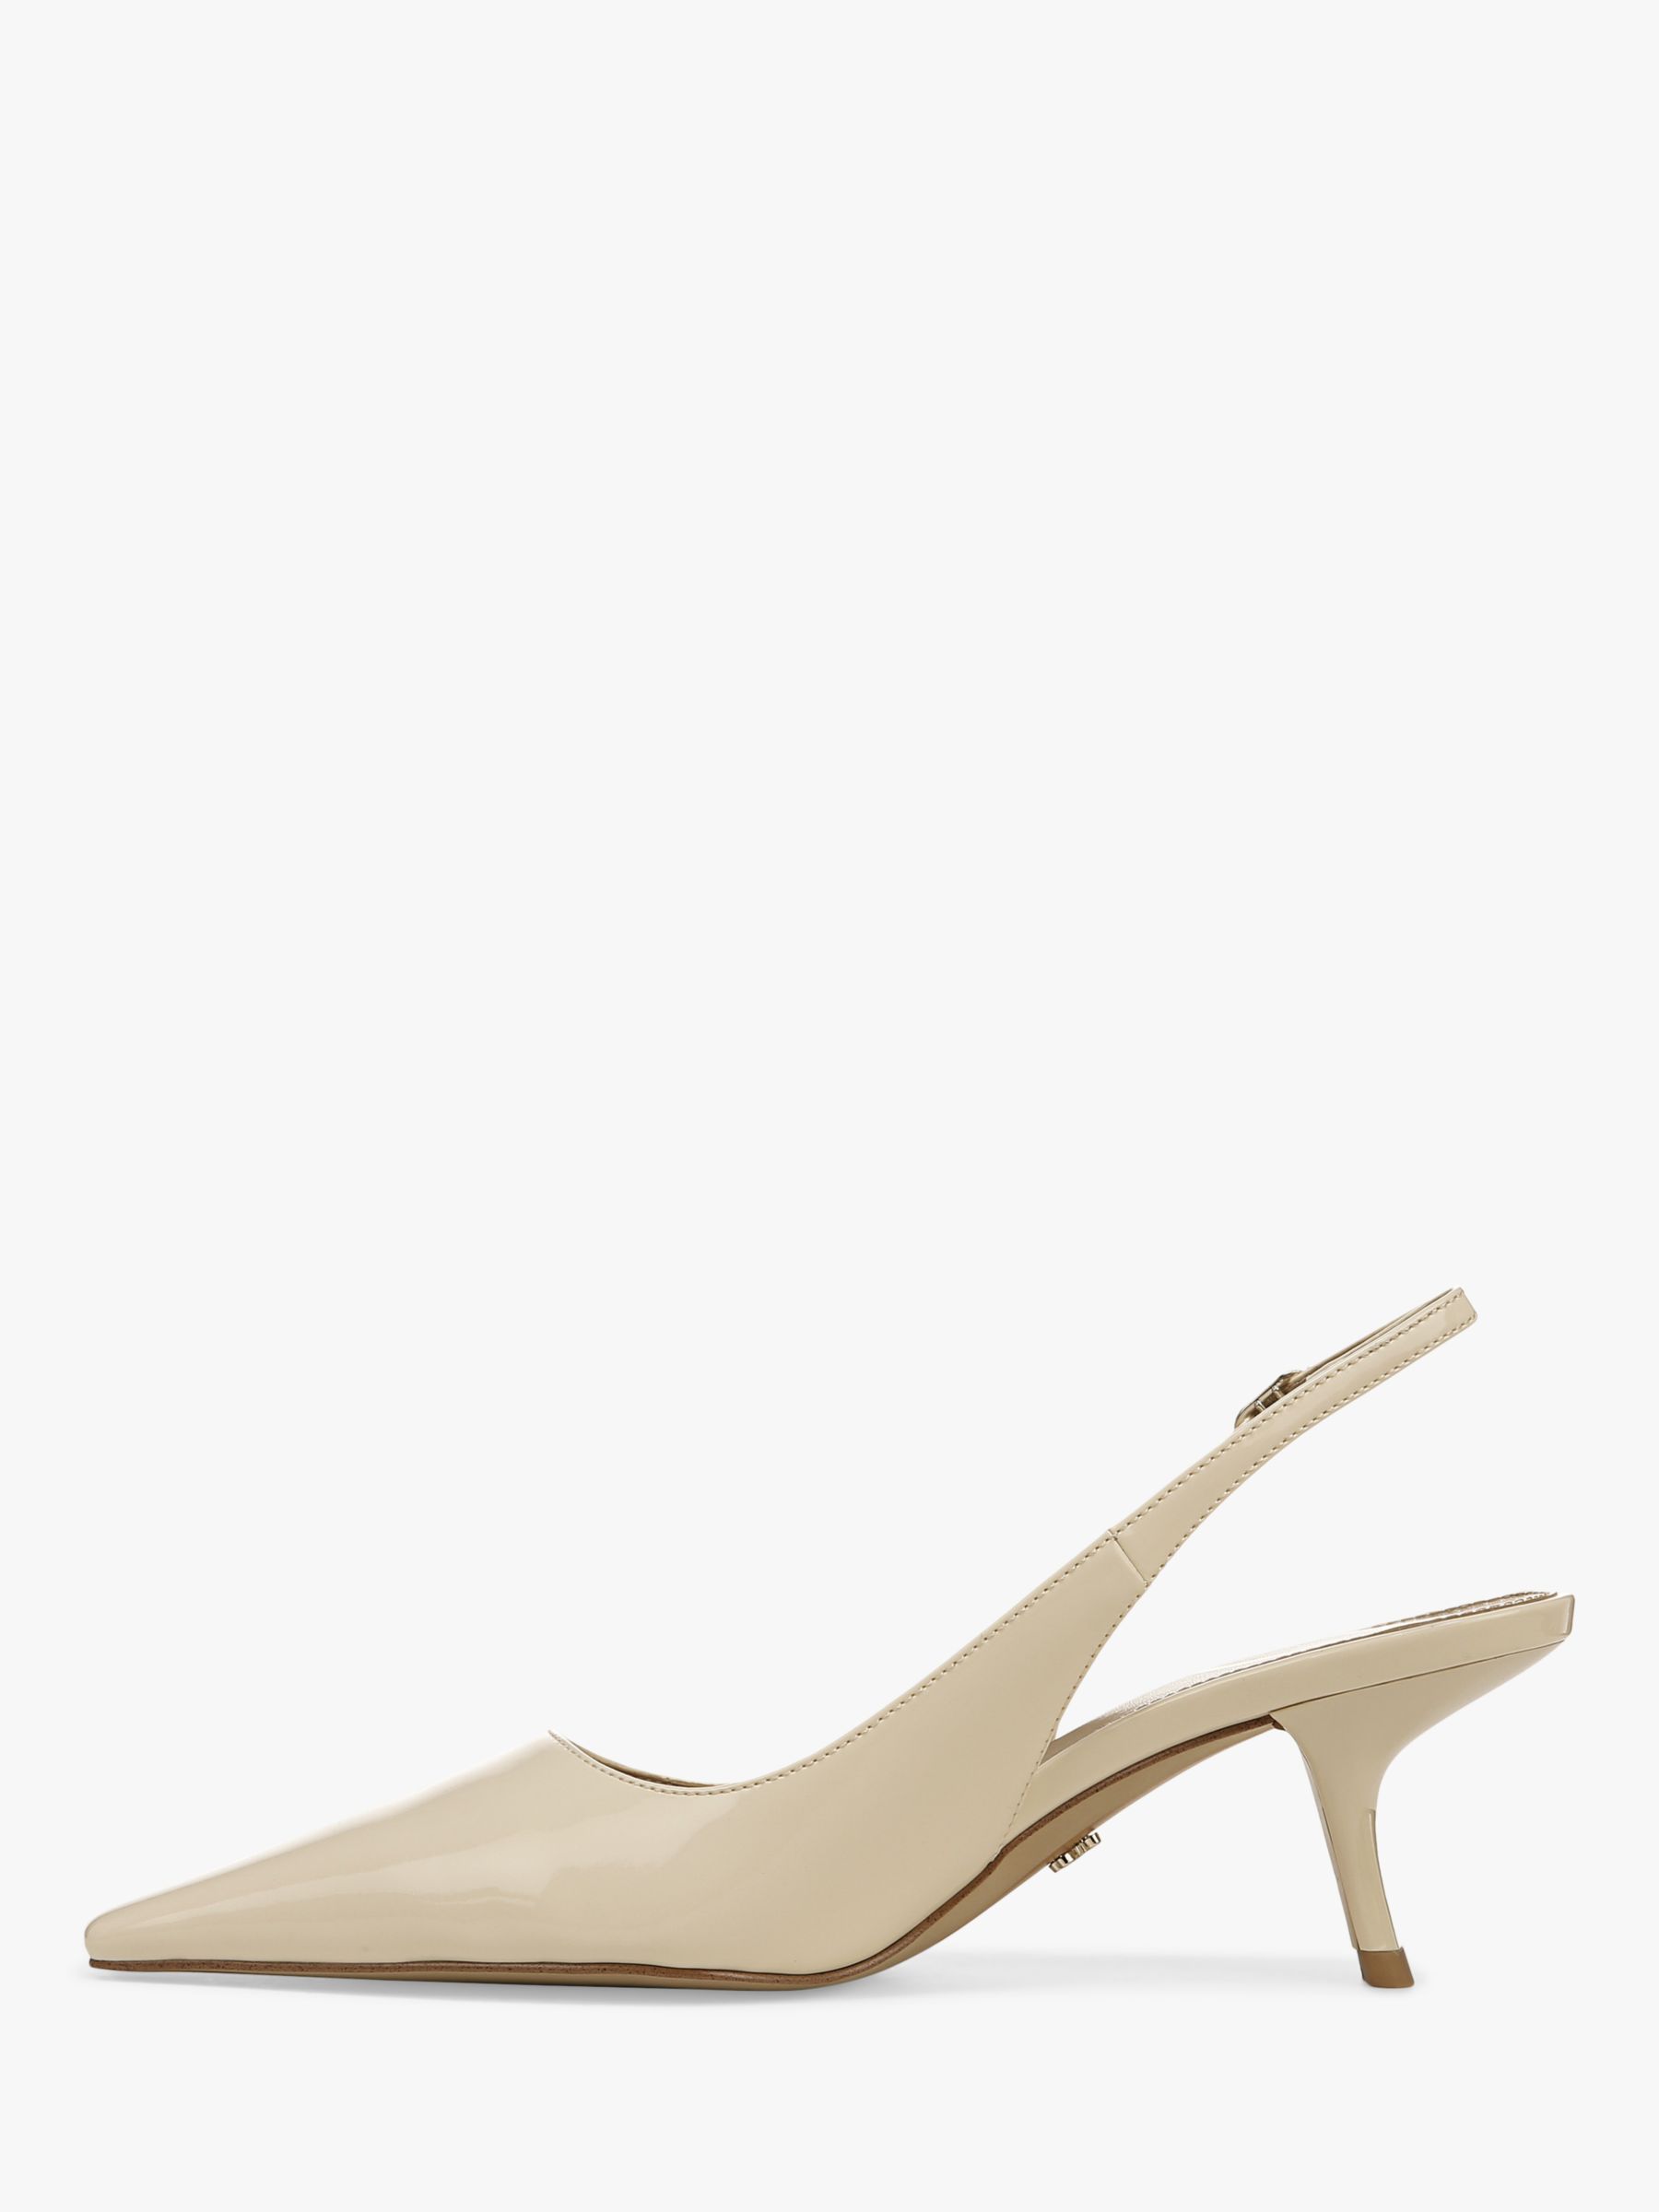 Sam Edelman Bianka Slingback Court Shoes, Ivory at John Lewis & Partners